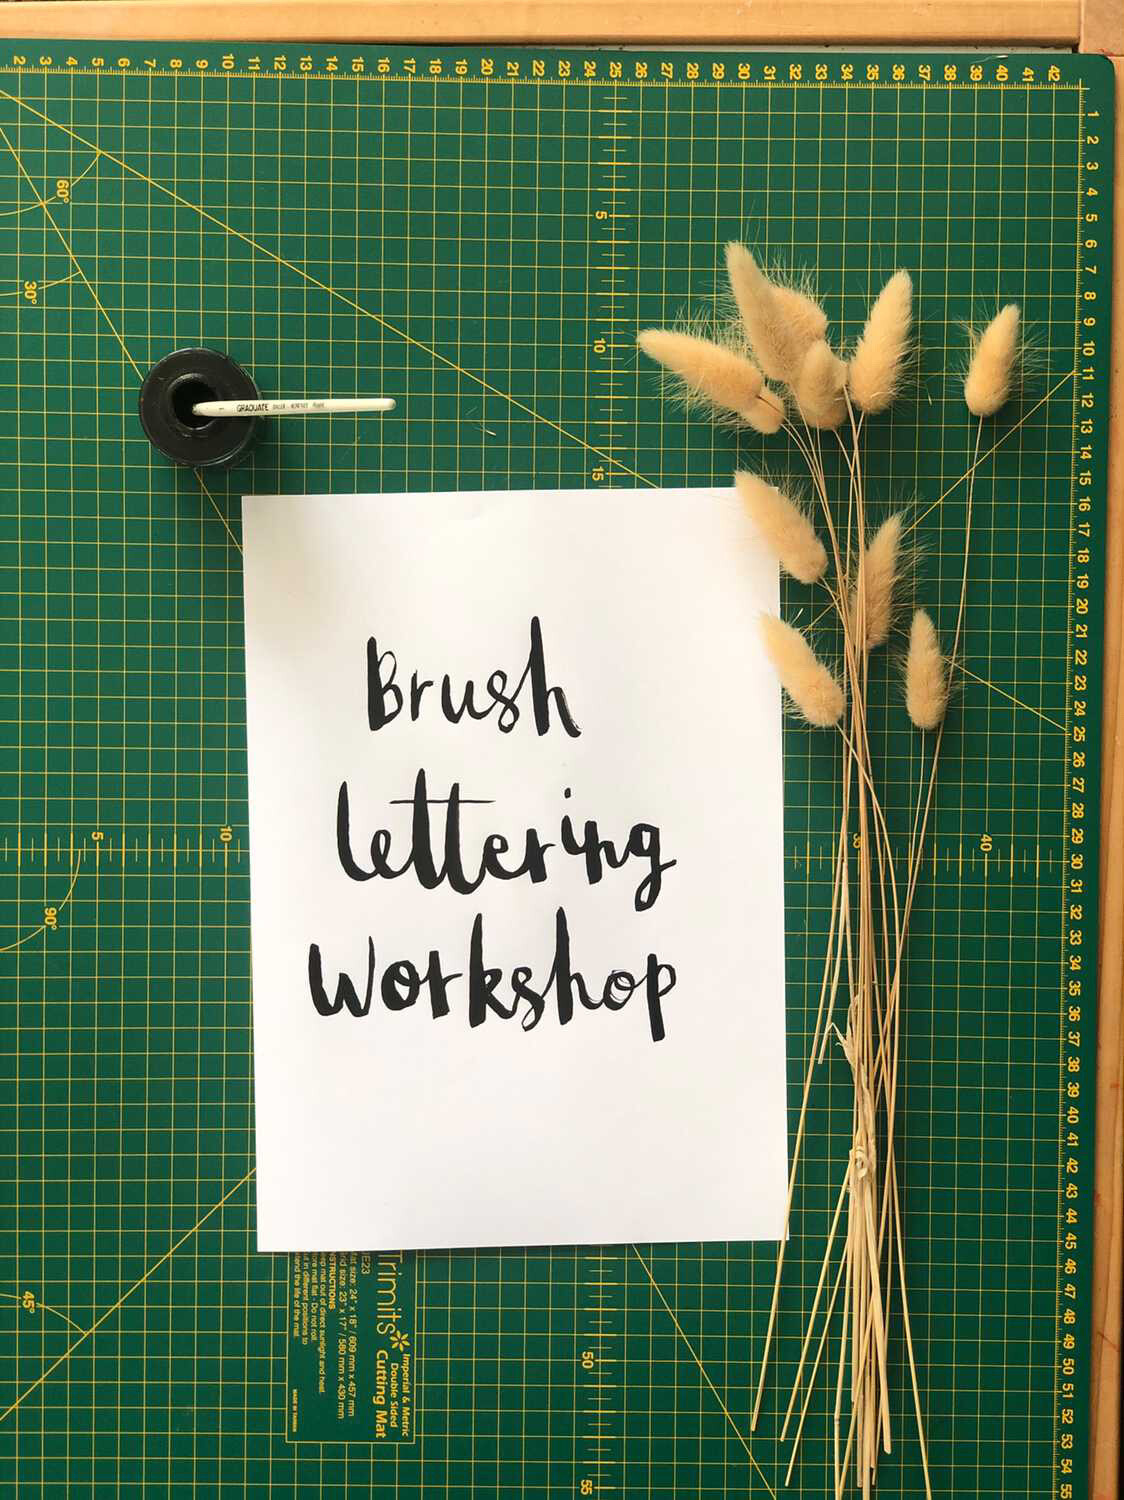 Brush Lettering Workshop!
Saturday 29th July 12:30-2:00